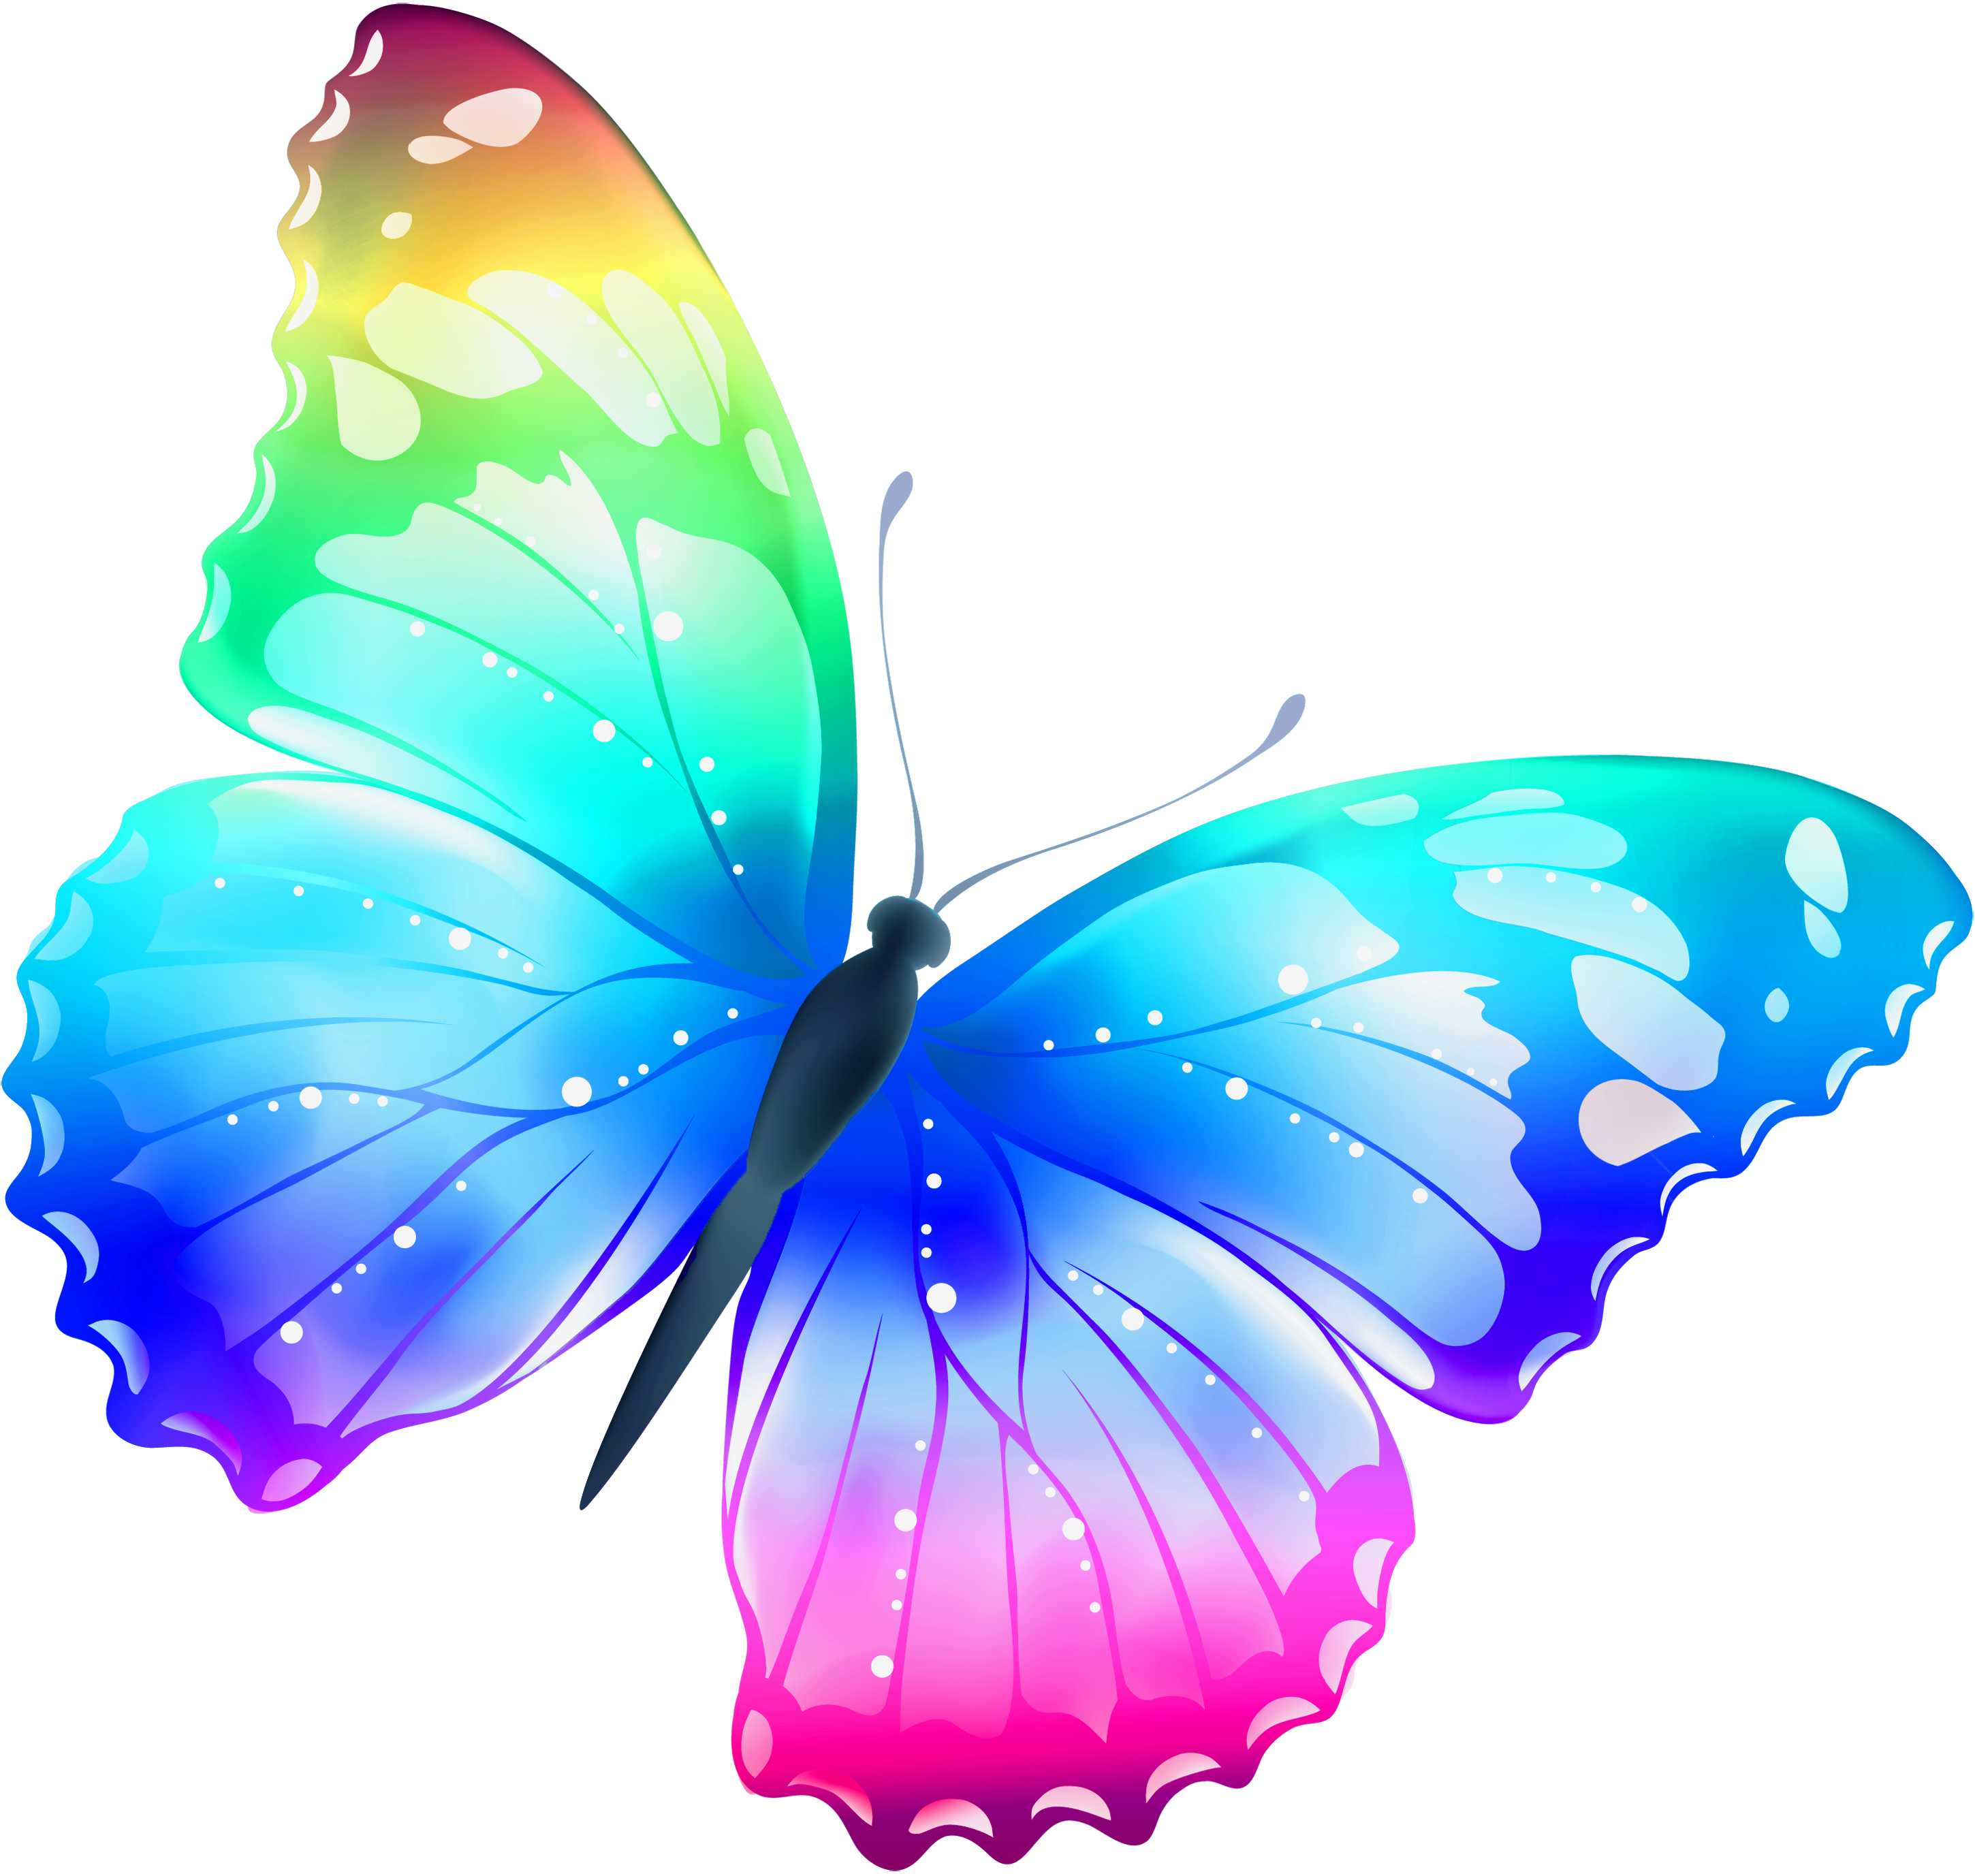 Domain Butterfly Clip Art ..